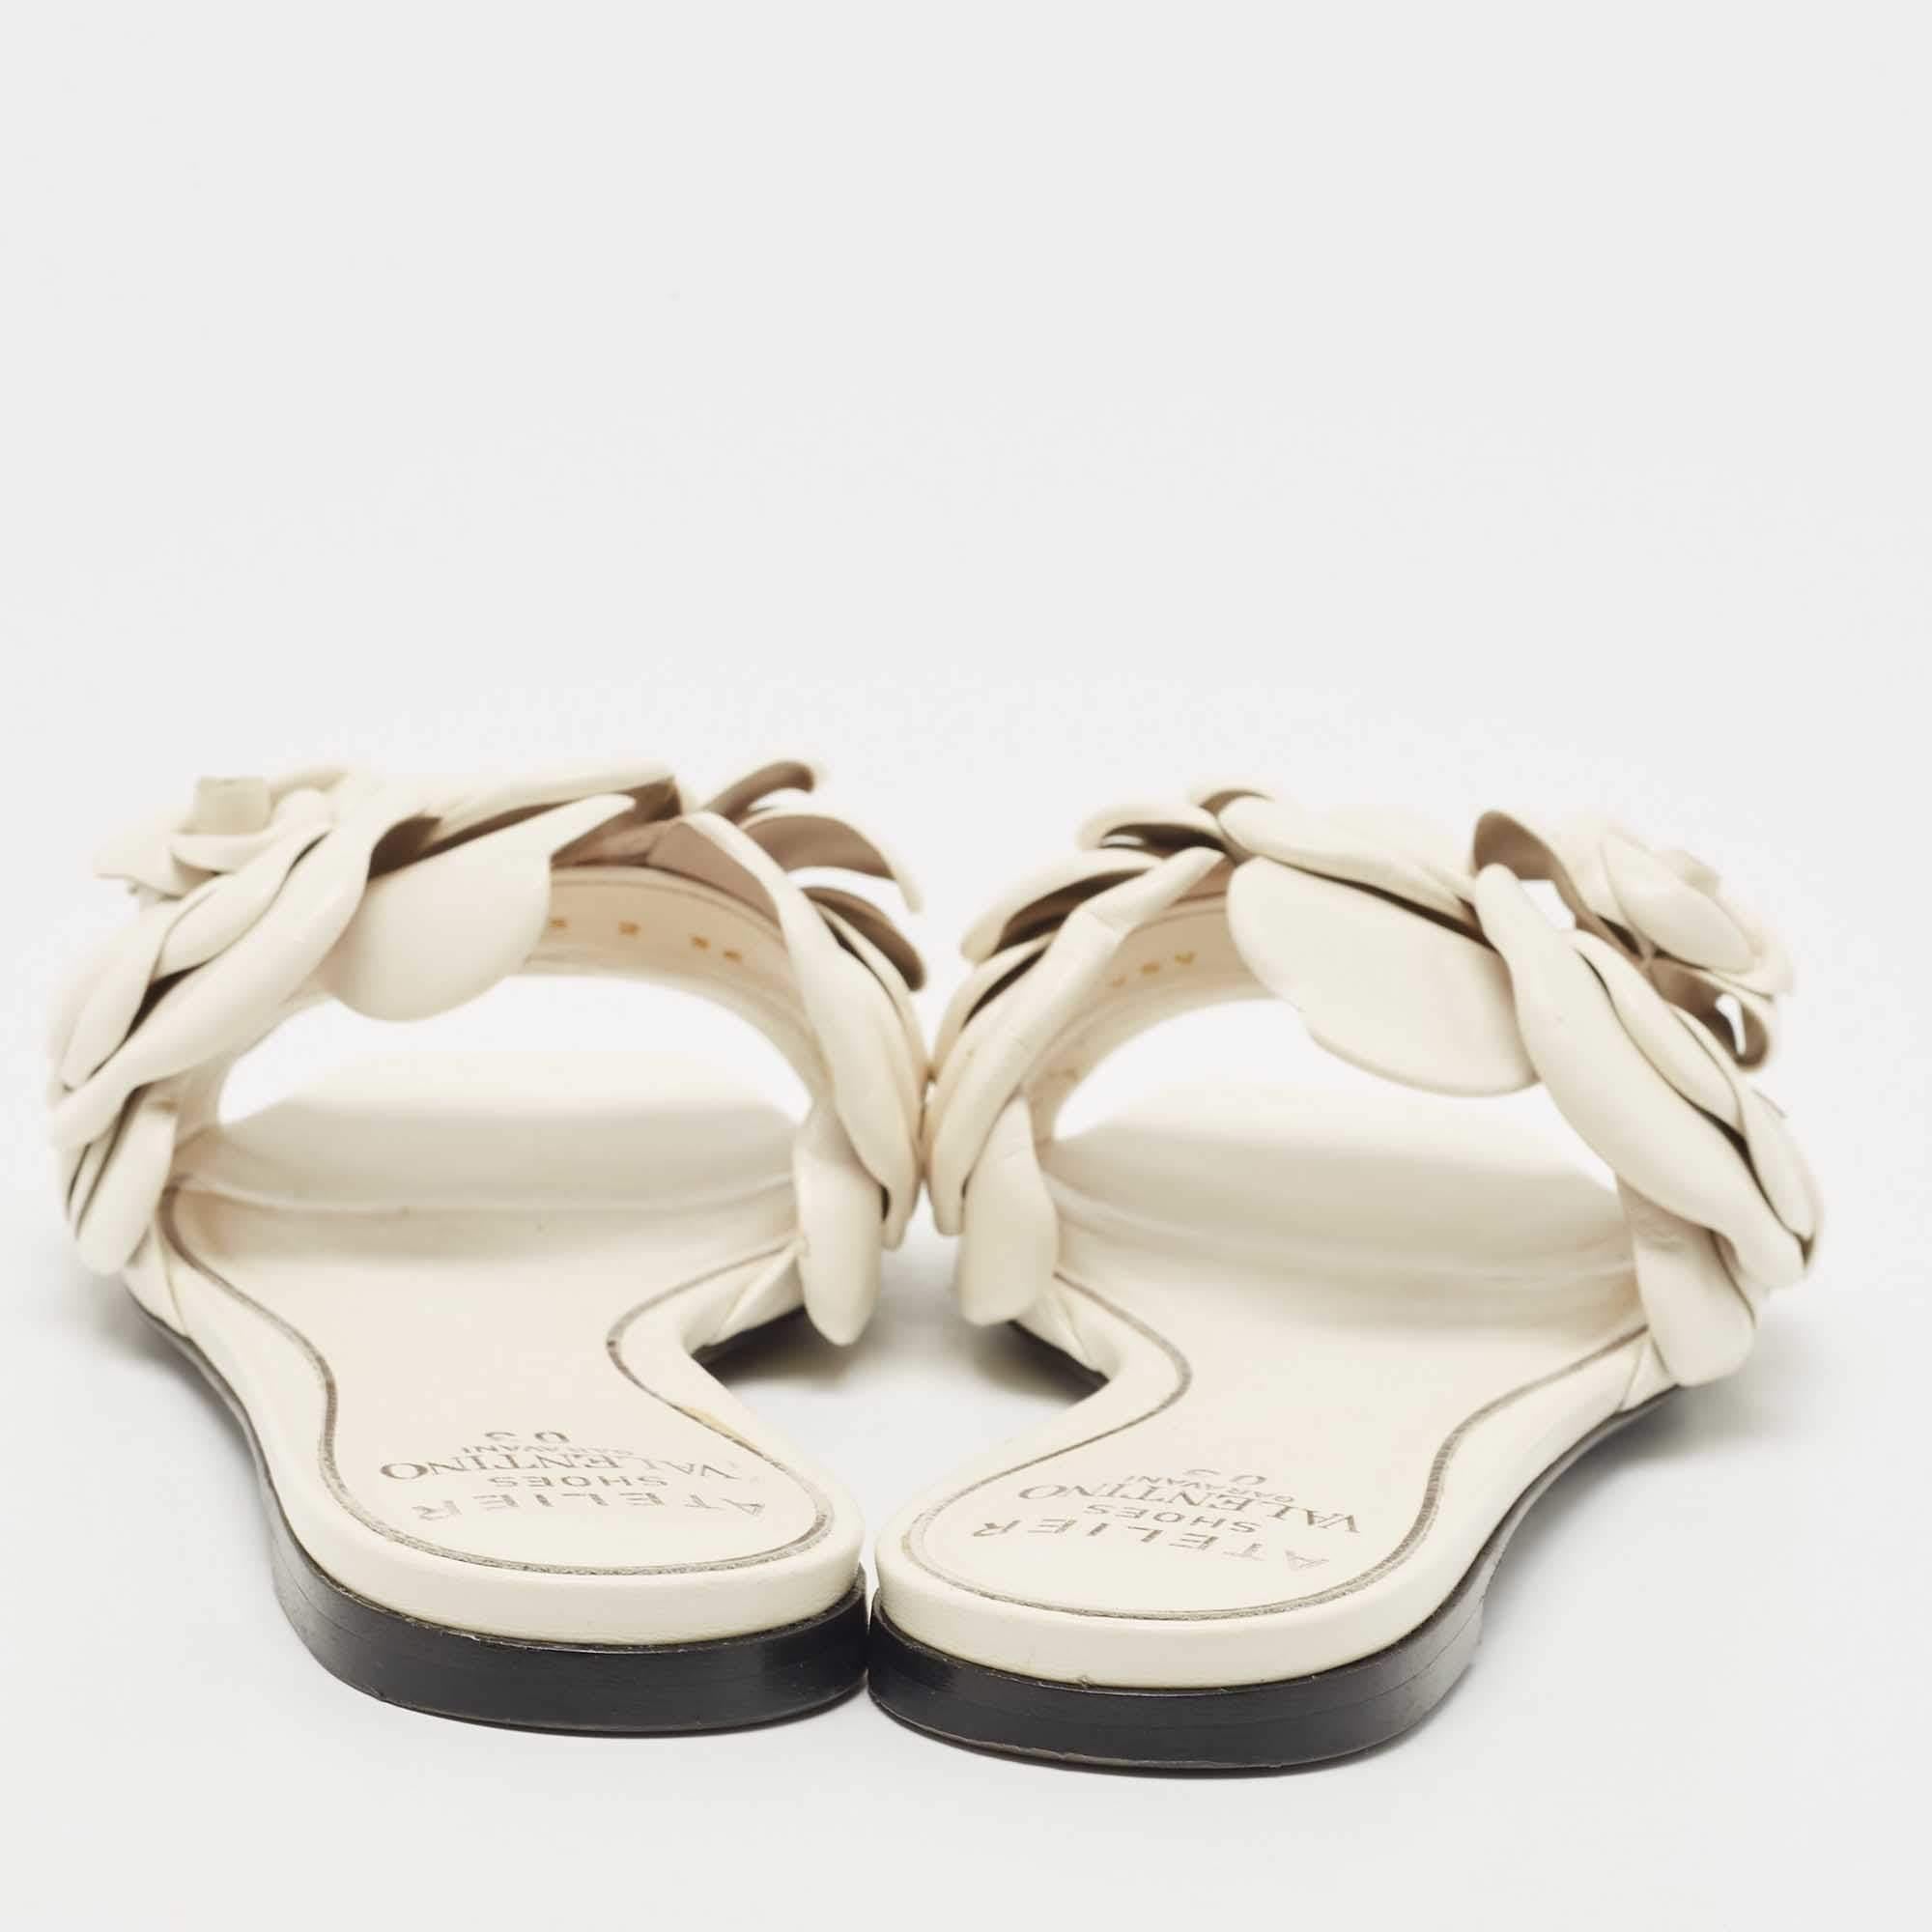 Blanc Chaussures plates en cuir blanc Atelier 03 Rose Edition de Valentino, Taille 36